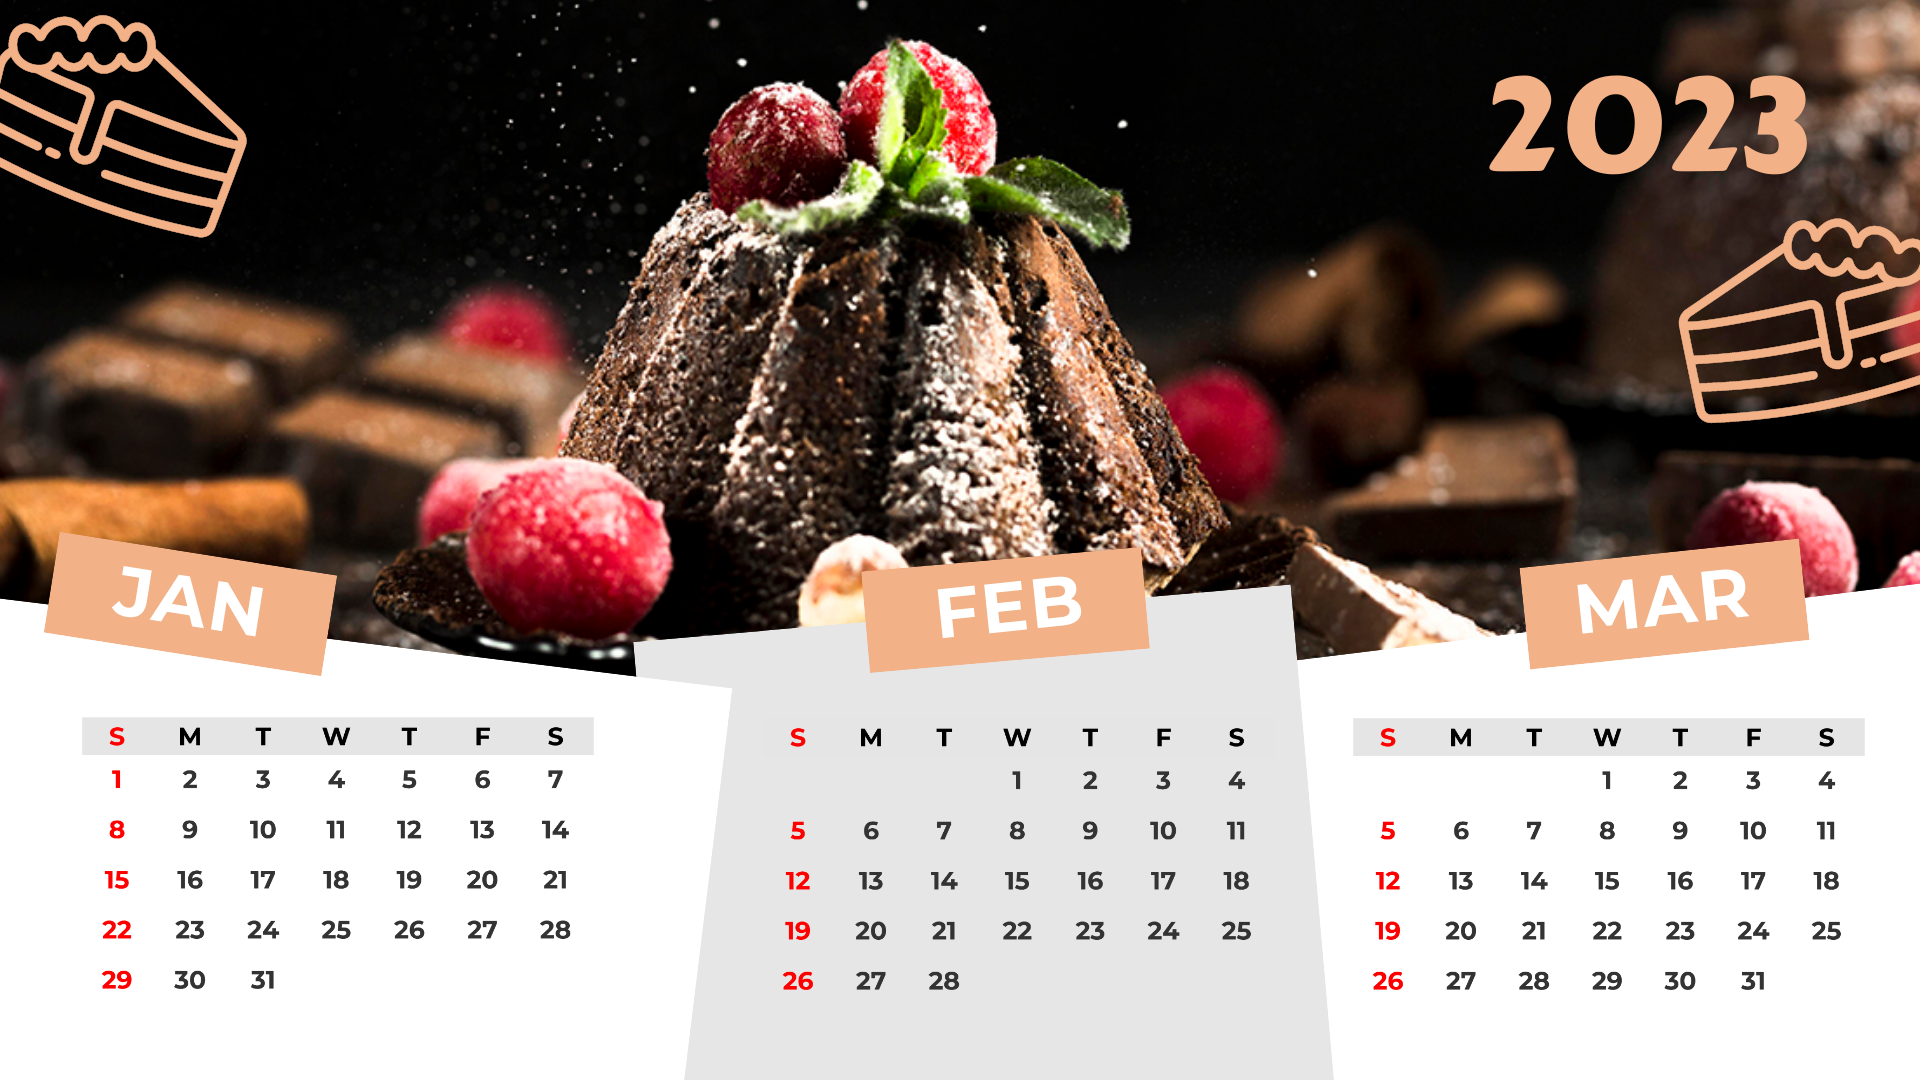 Food Calendar Template